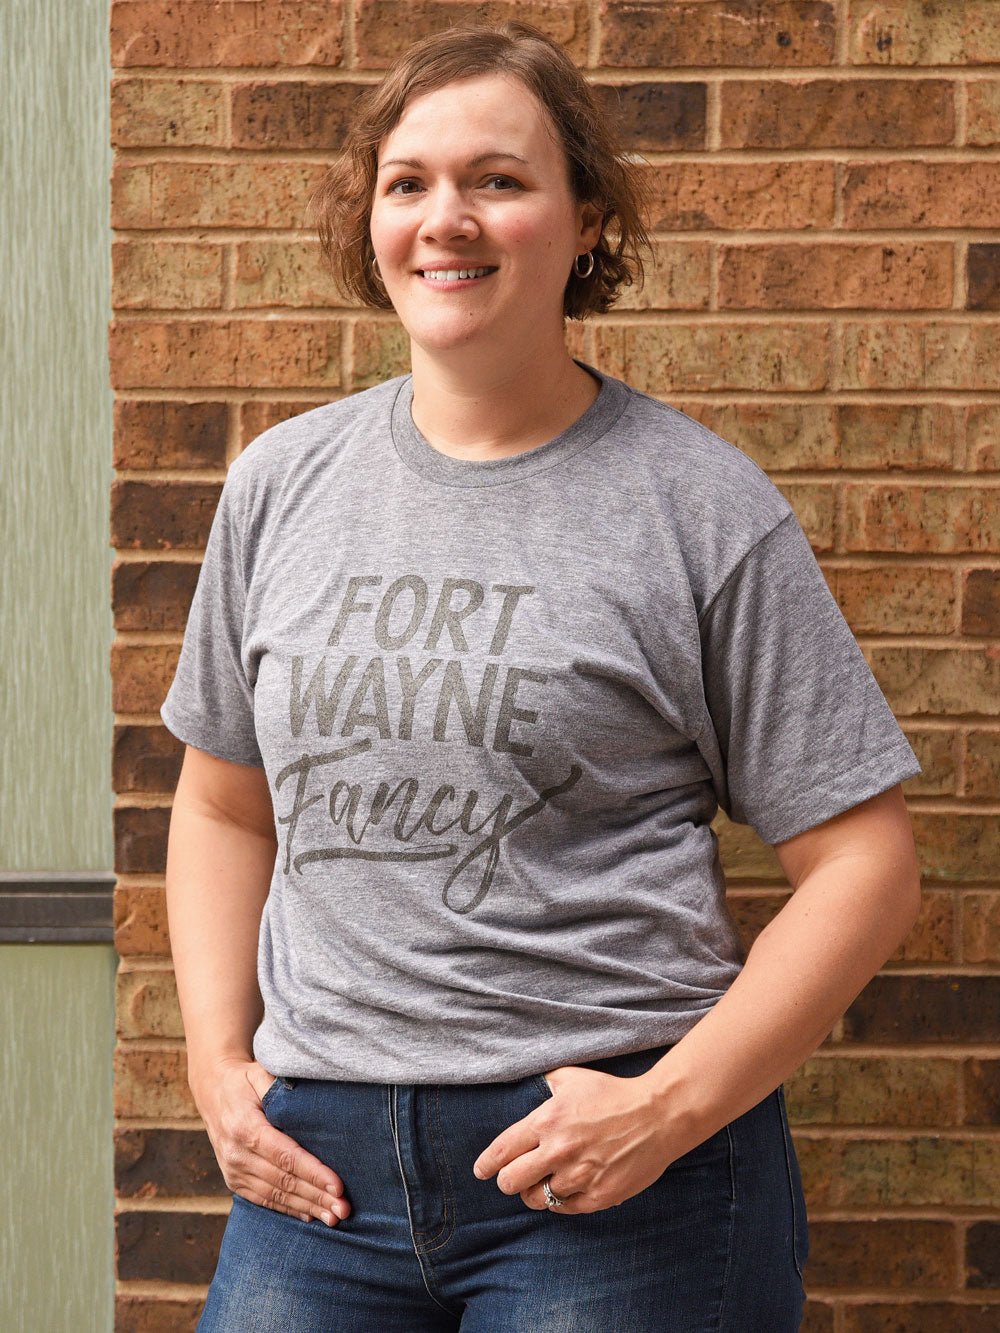 Fort Wayne Fancy gray heather t-shirt on model by brick wall